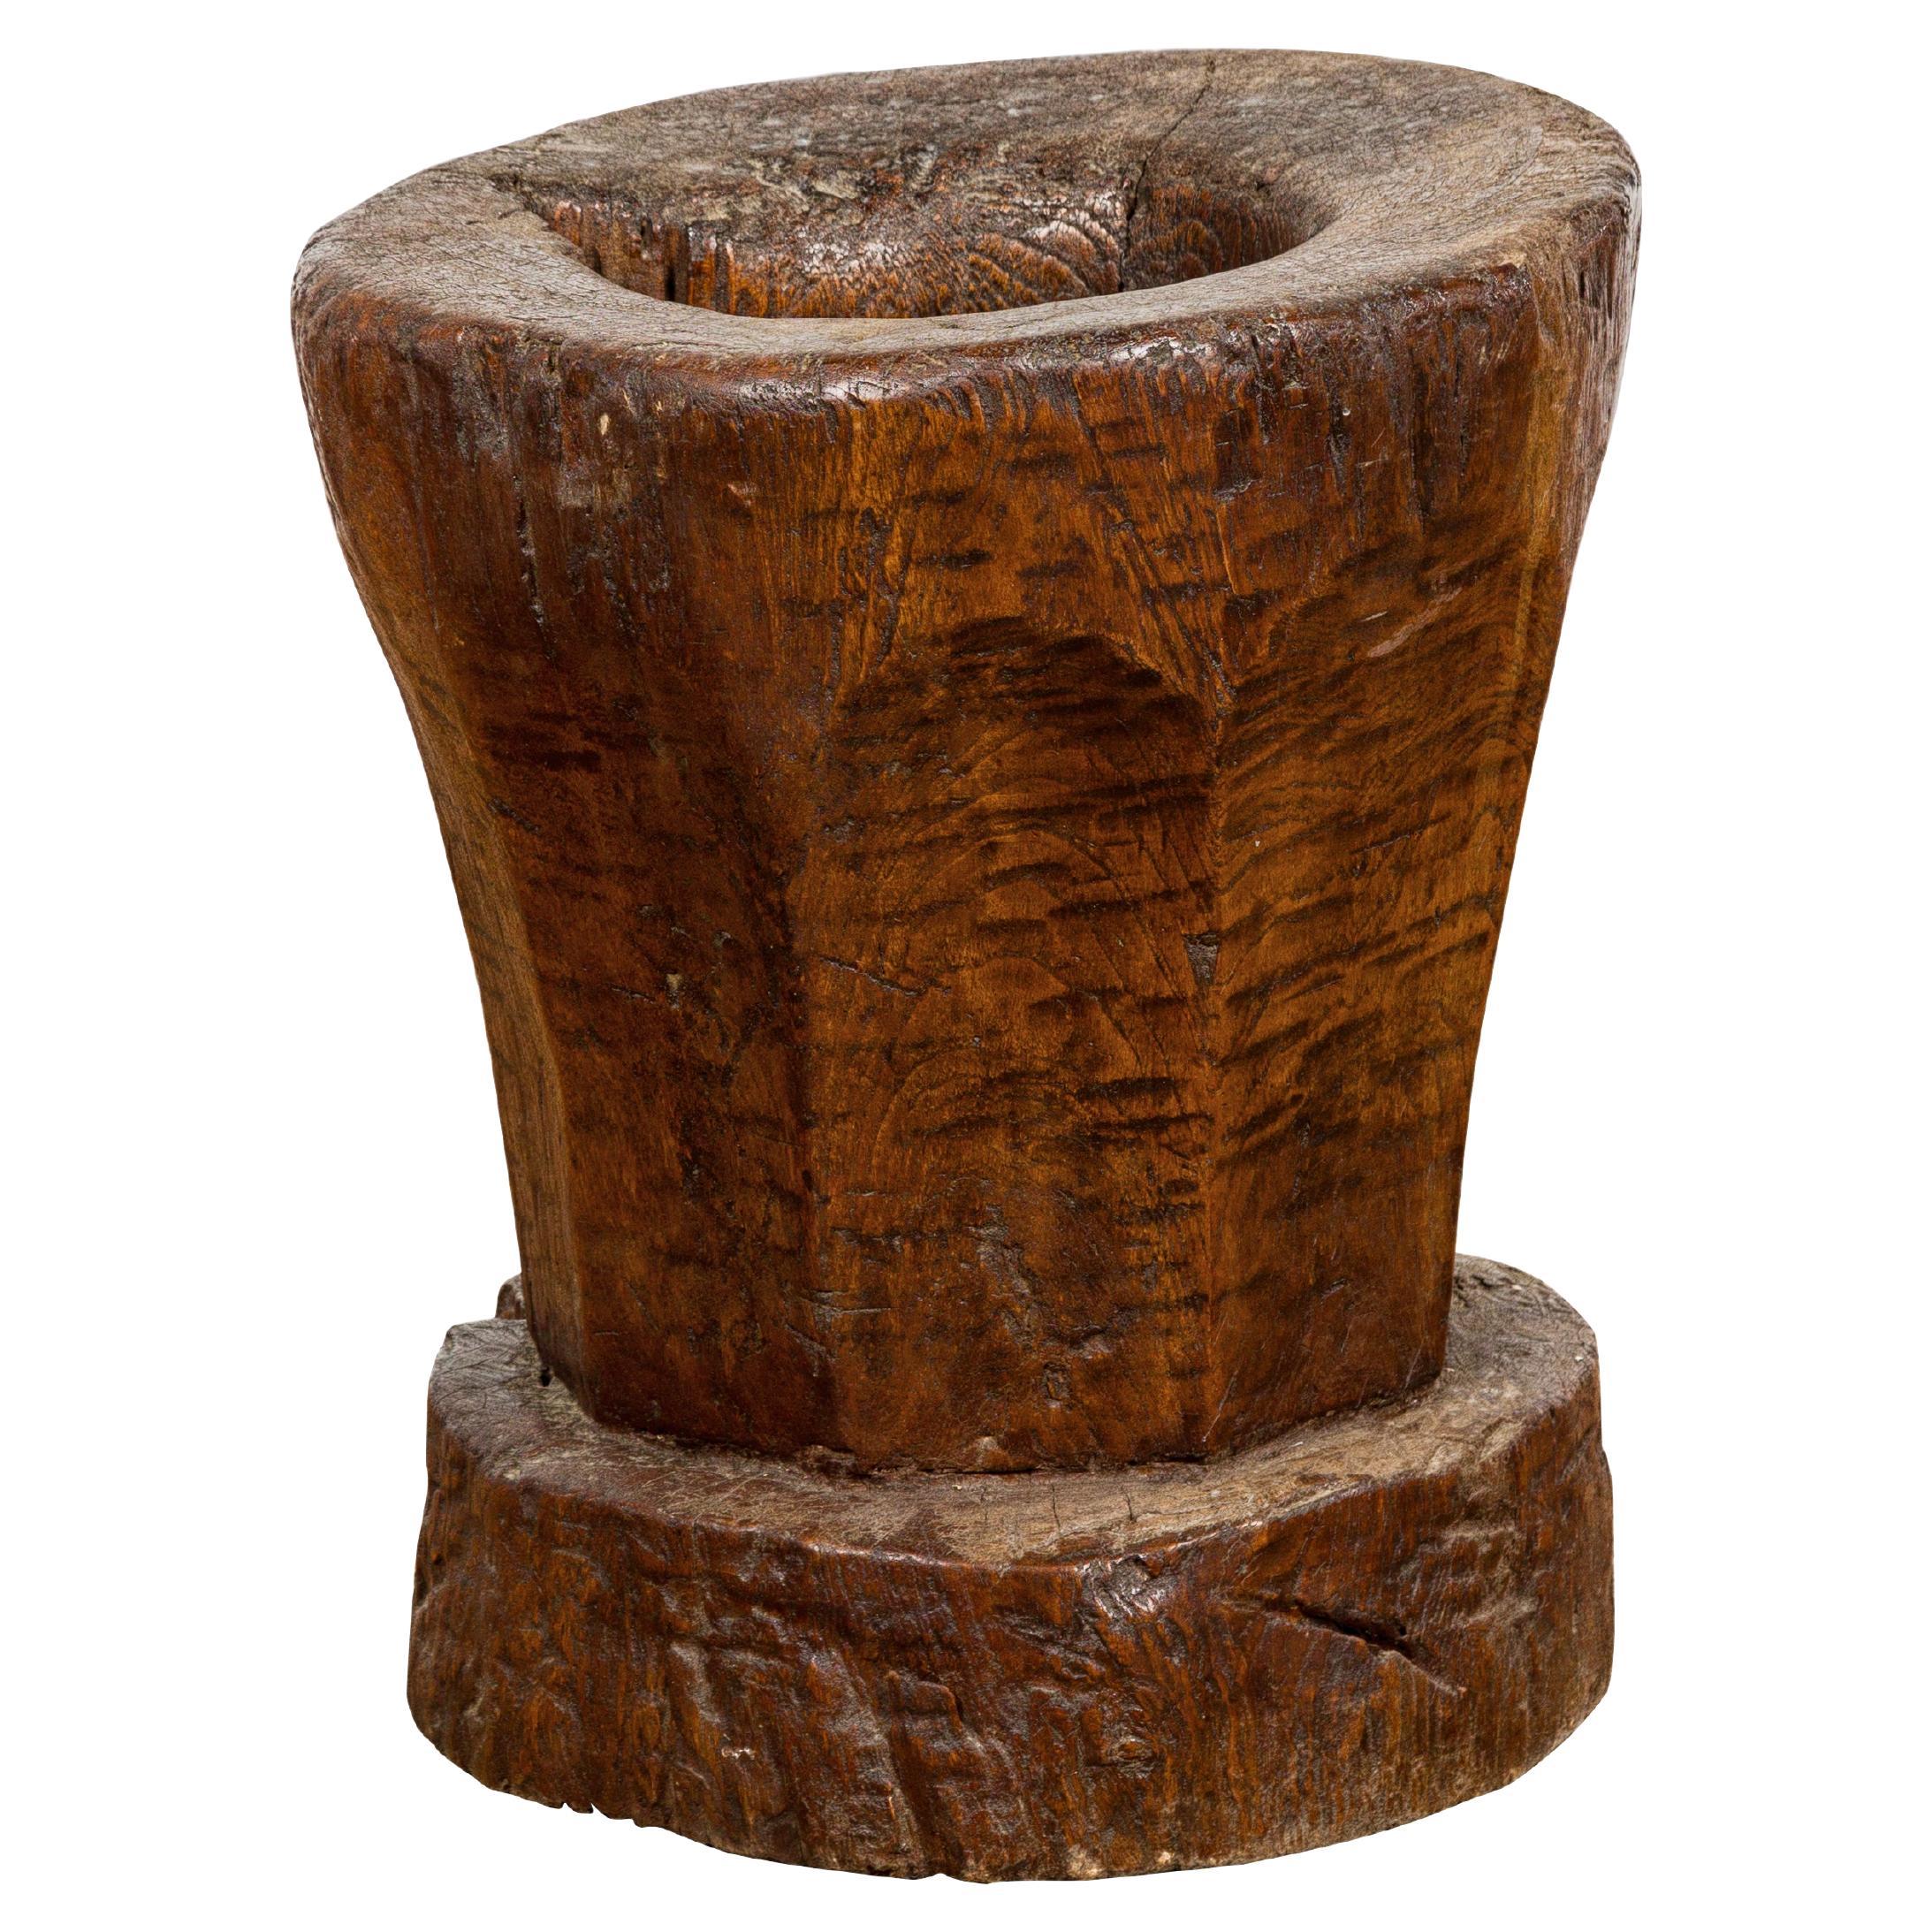 Teak Wood Rustic Mortar Urn Repurposed as an Antique Planter, 19th Century